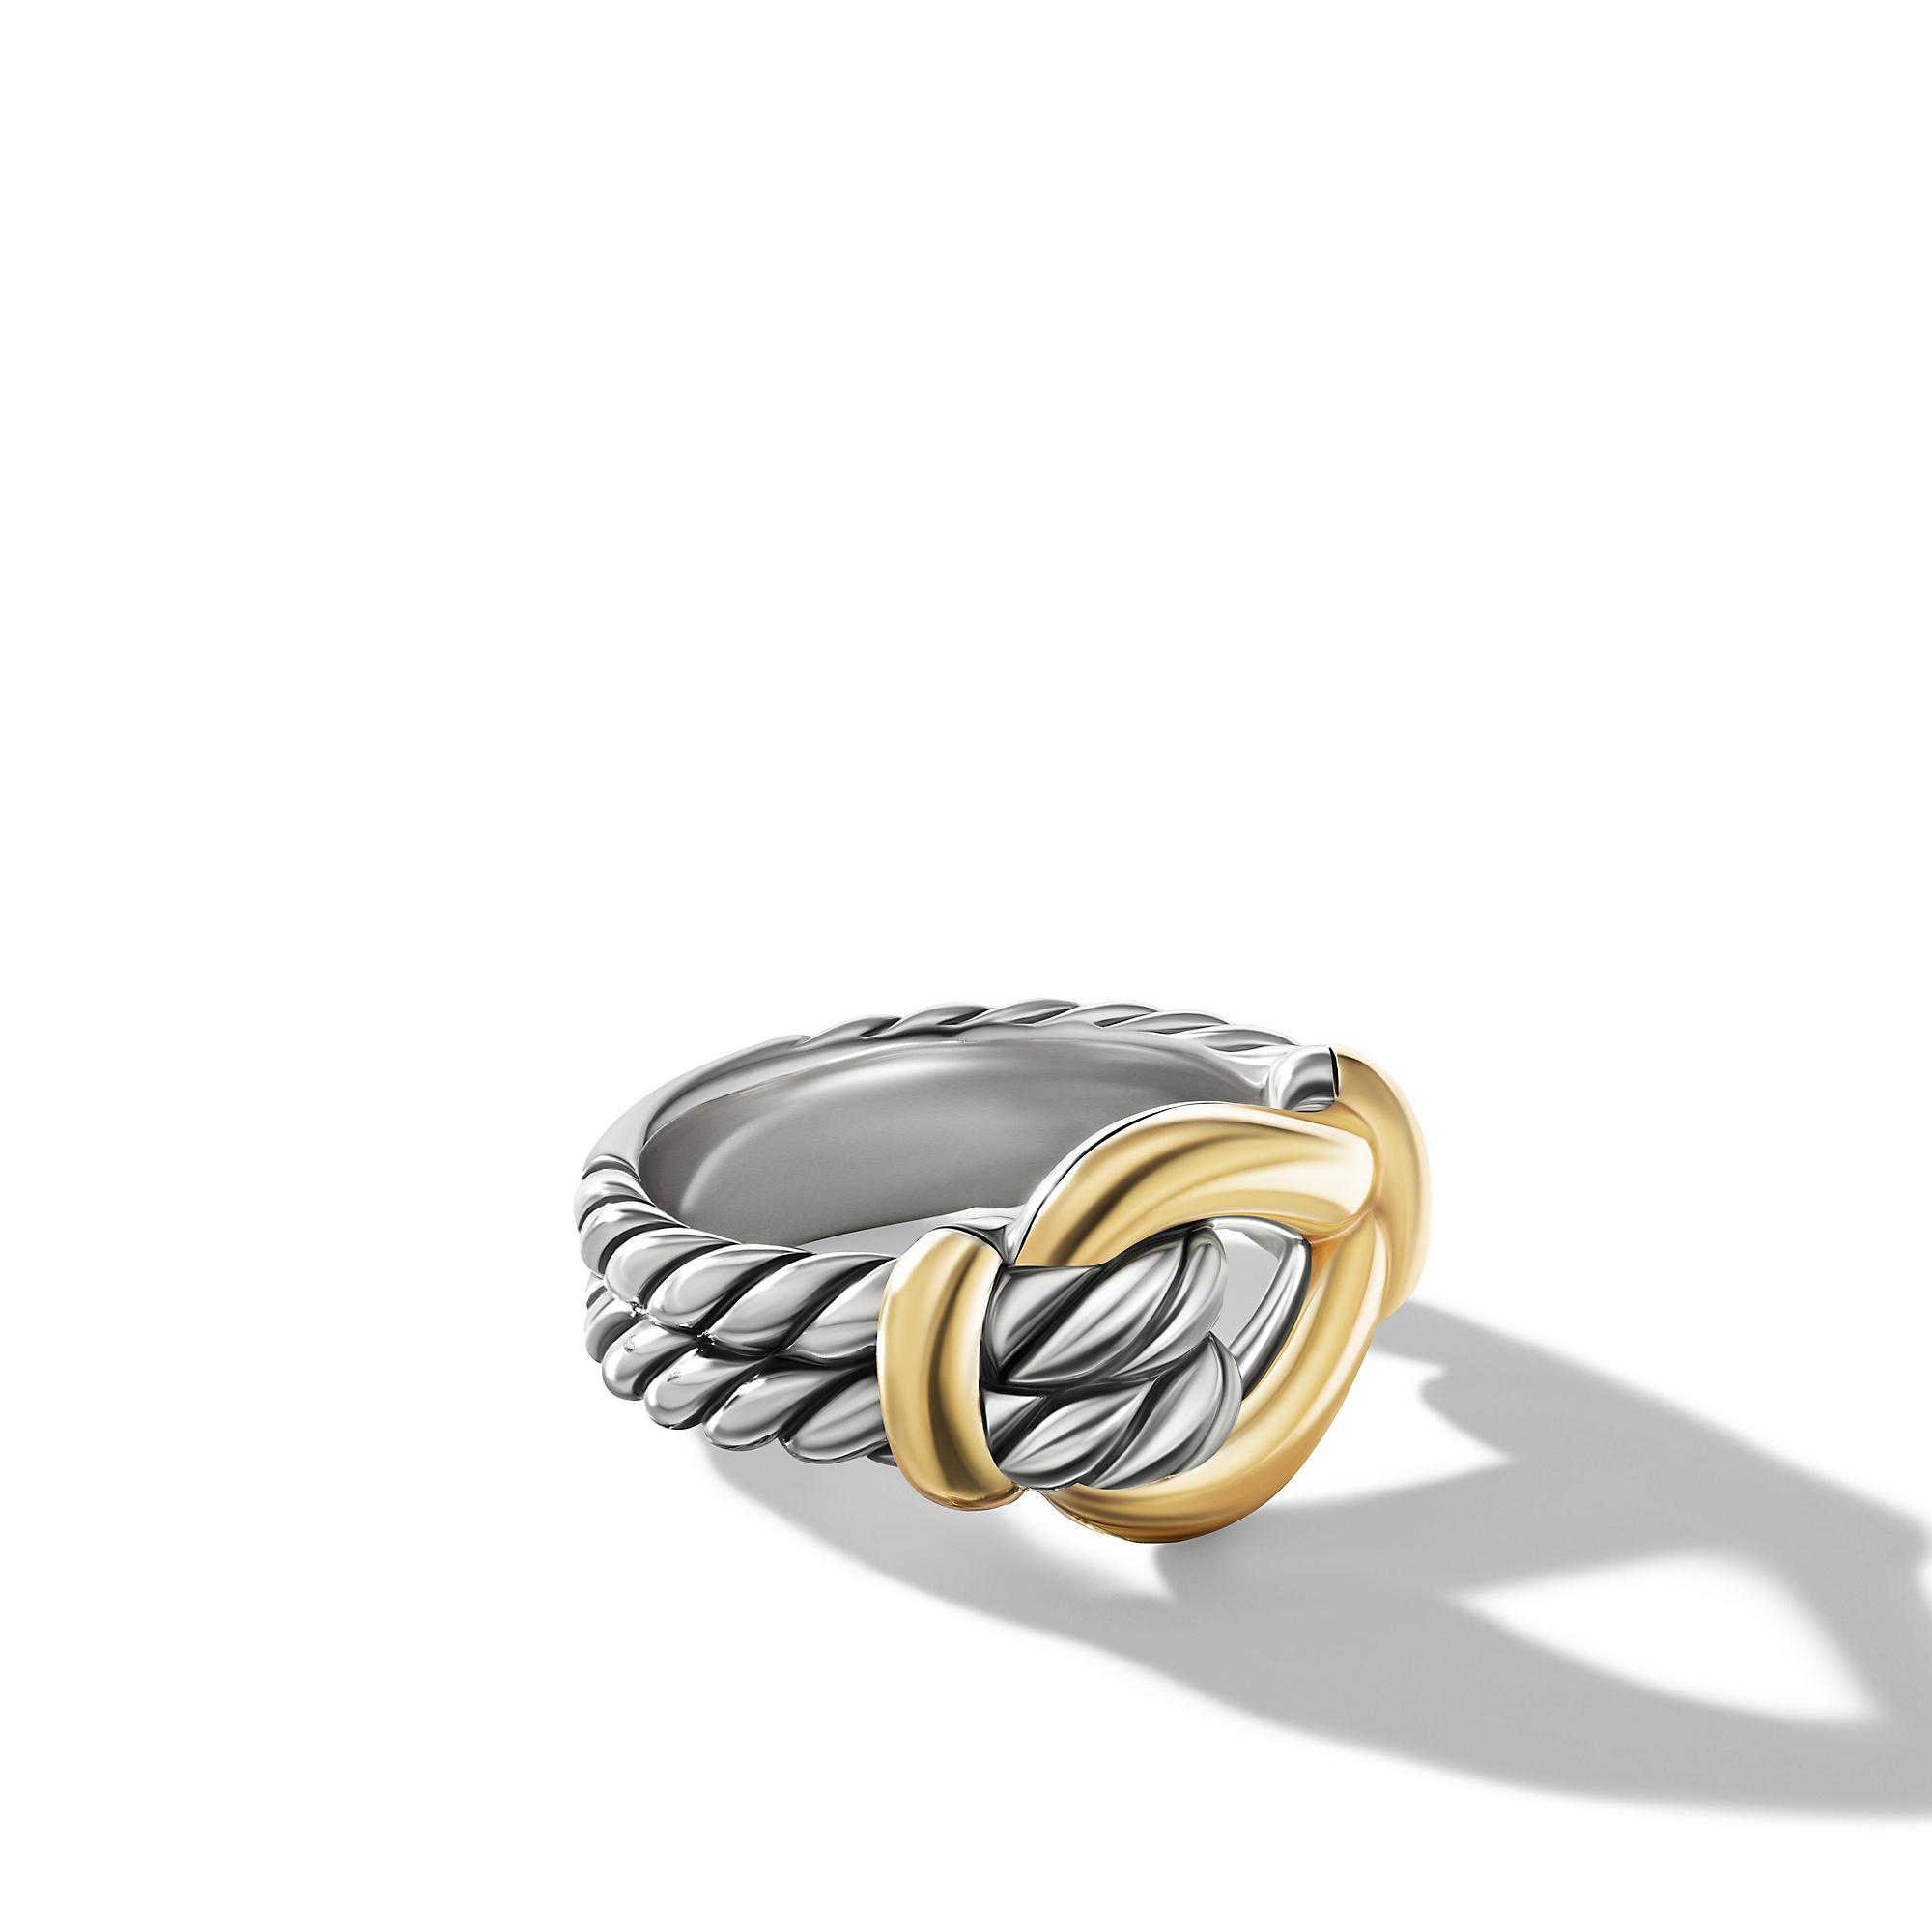 David Yurman Thoroughbred Loop 13mm Ring with 18k Yellow Gold, size 6.5